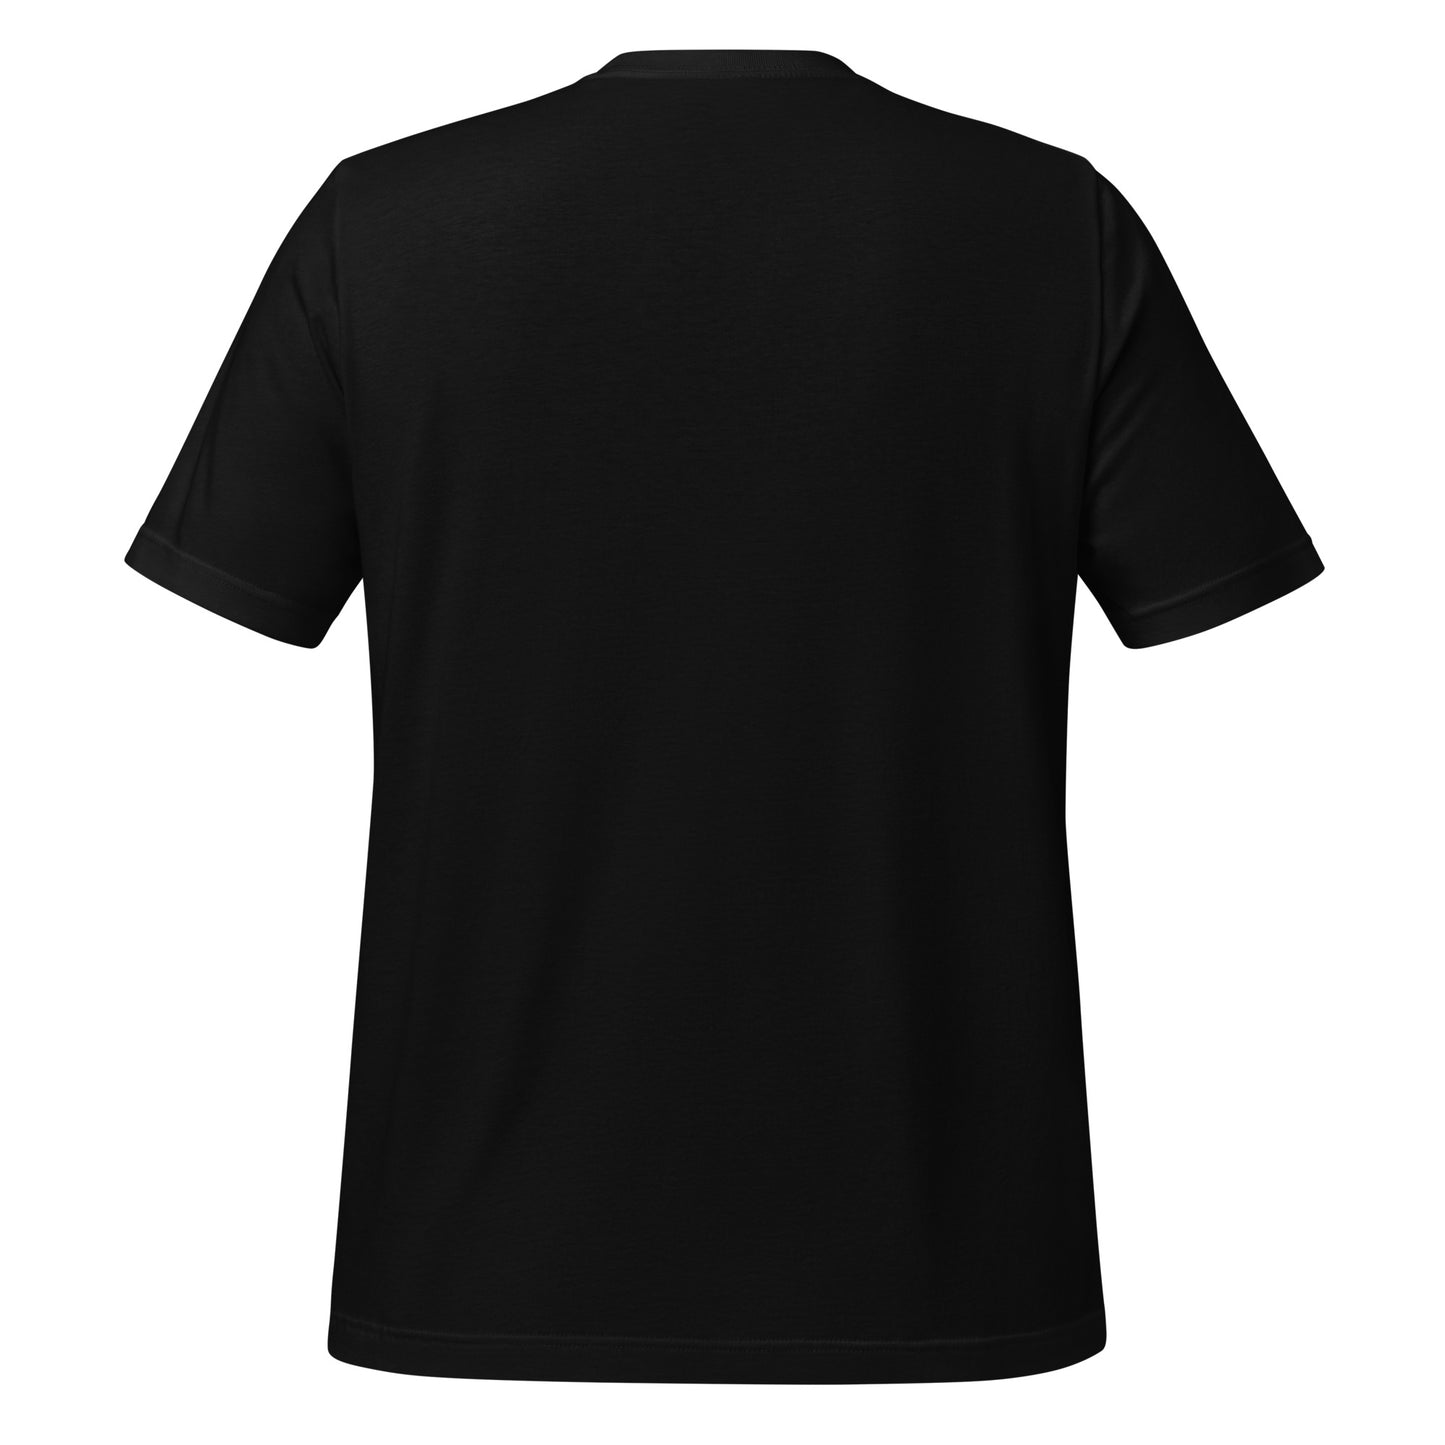 Black Rich Only Unisex t-shirt